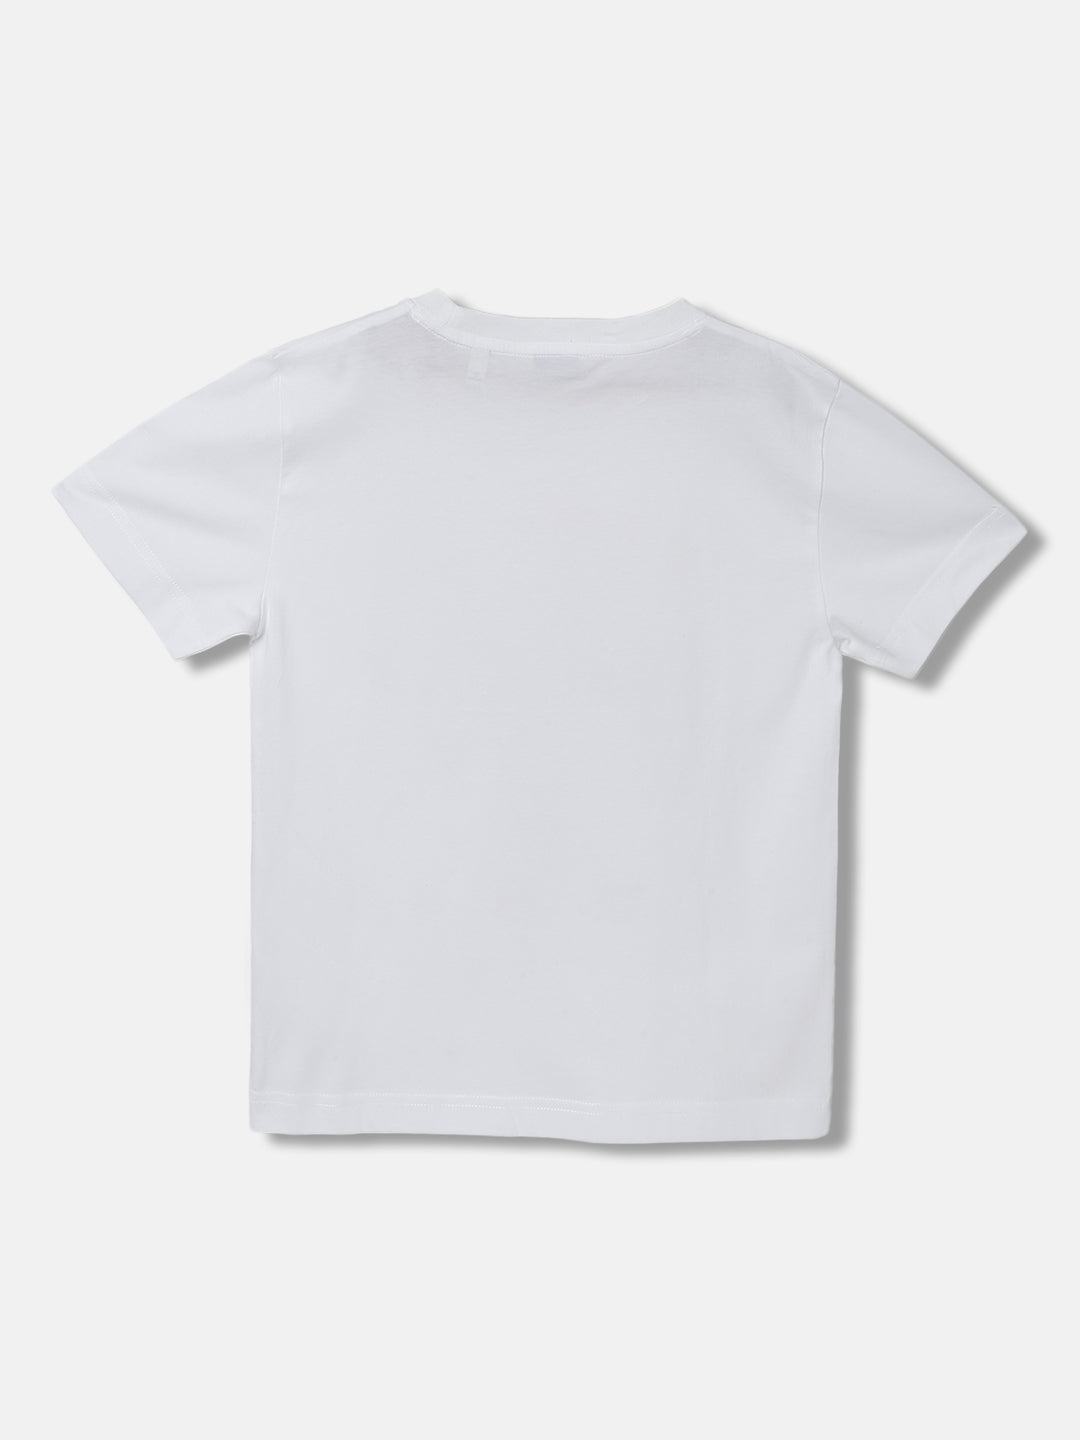 Gant Boys White Printed Round Neck Short Sleeves T-shirt